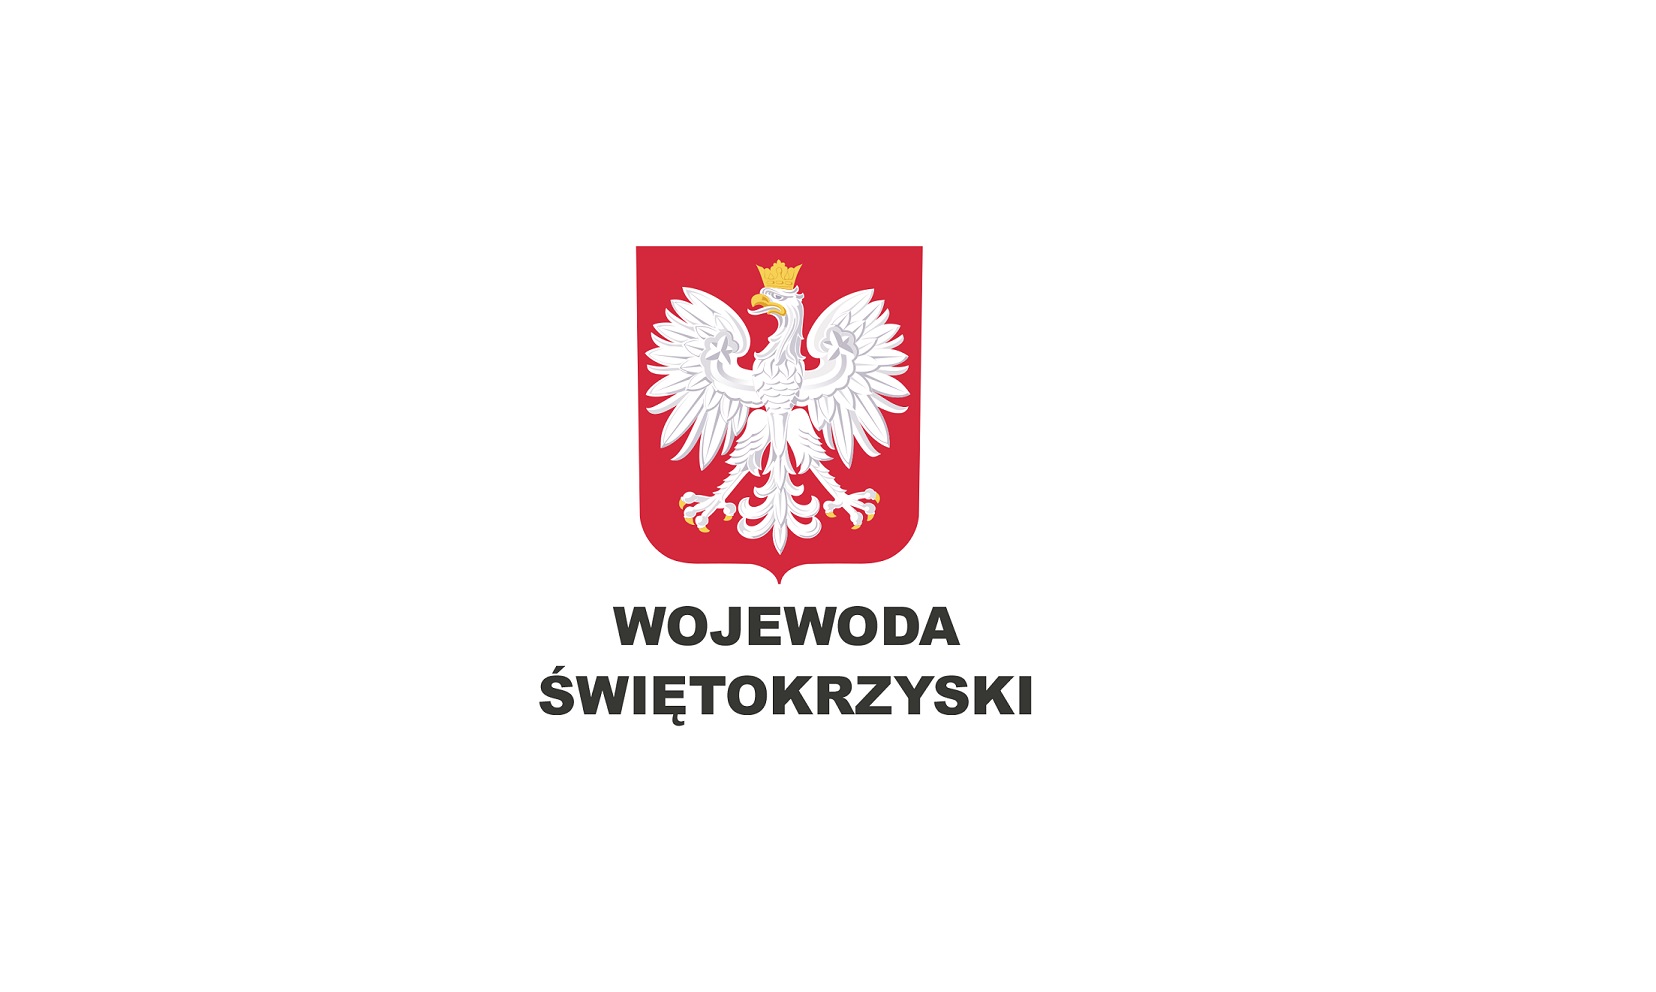 Honorary patronage of the Świętokrzyskie Voivode over the Swietokrzyskie - a good neighborhood project